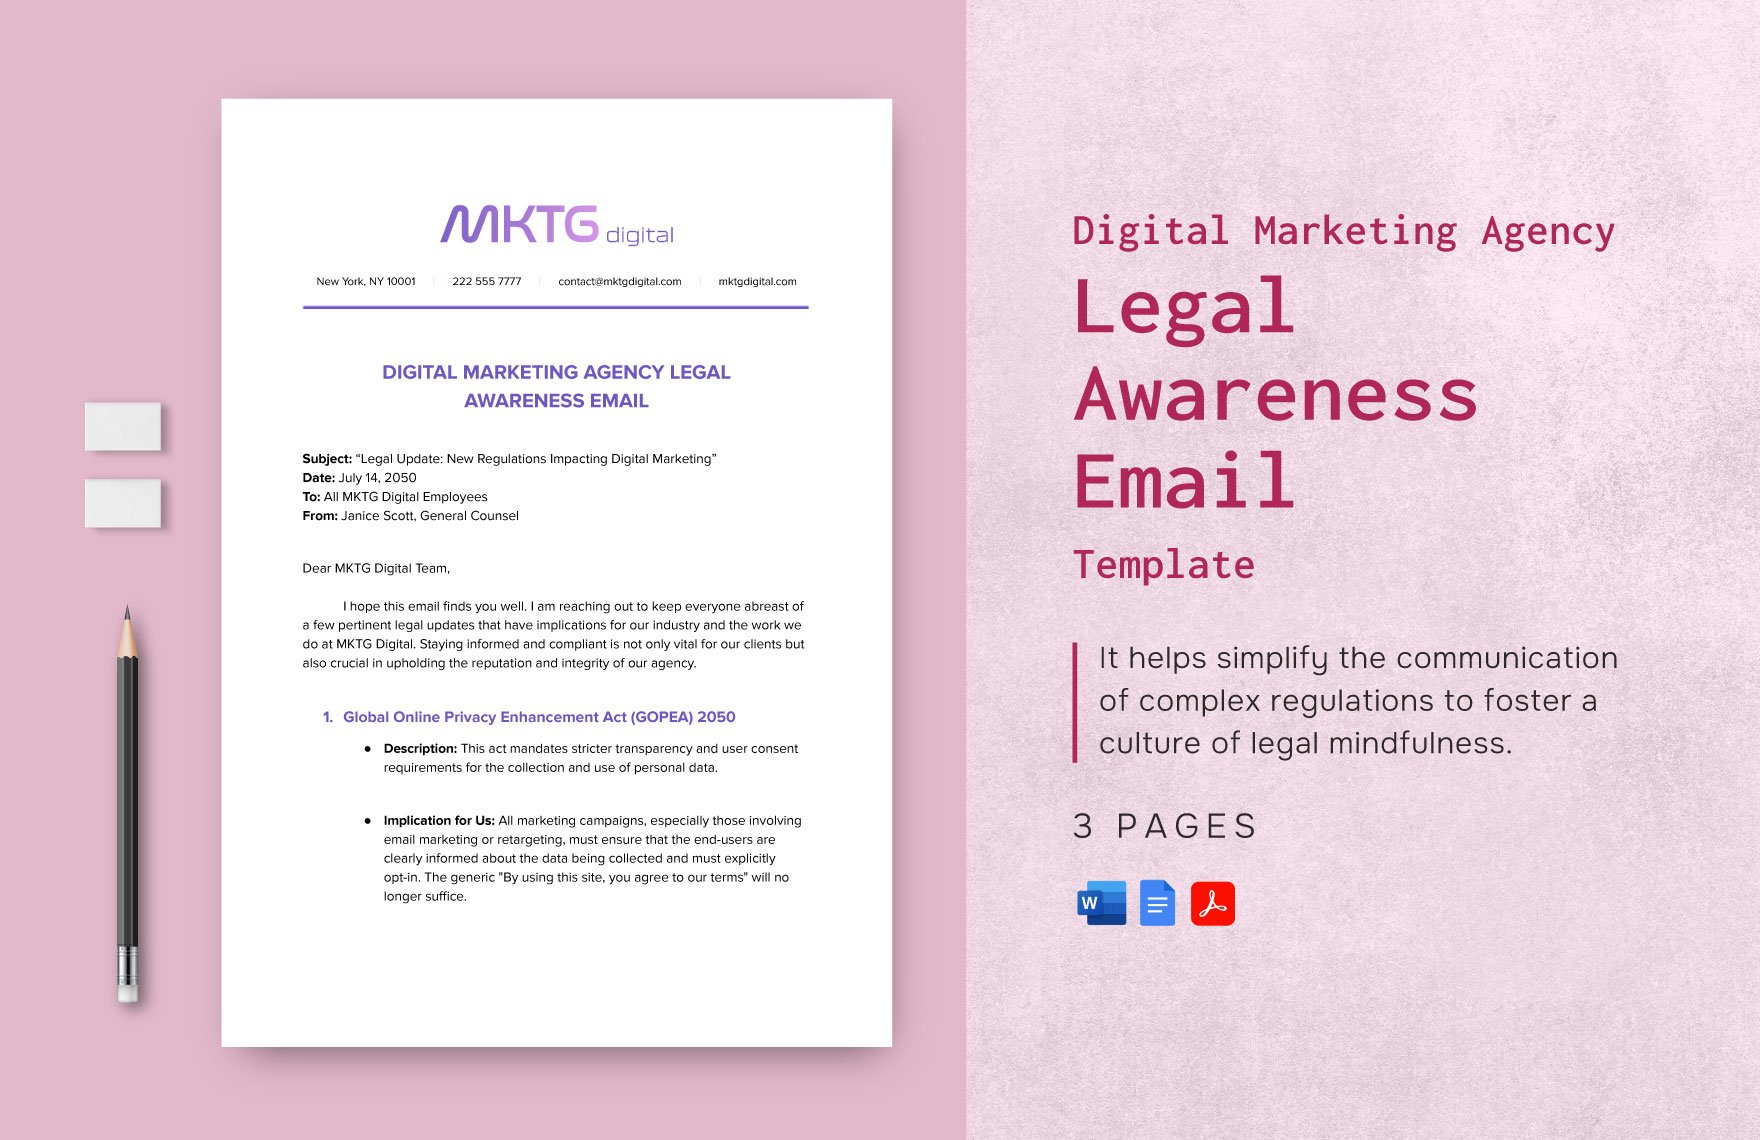 Digital Marketing Agency Legal Awareness Email Template